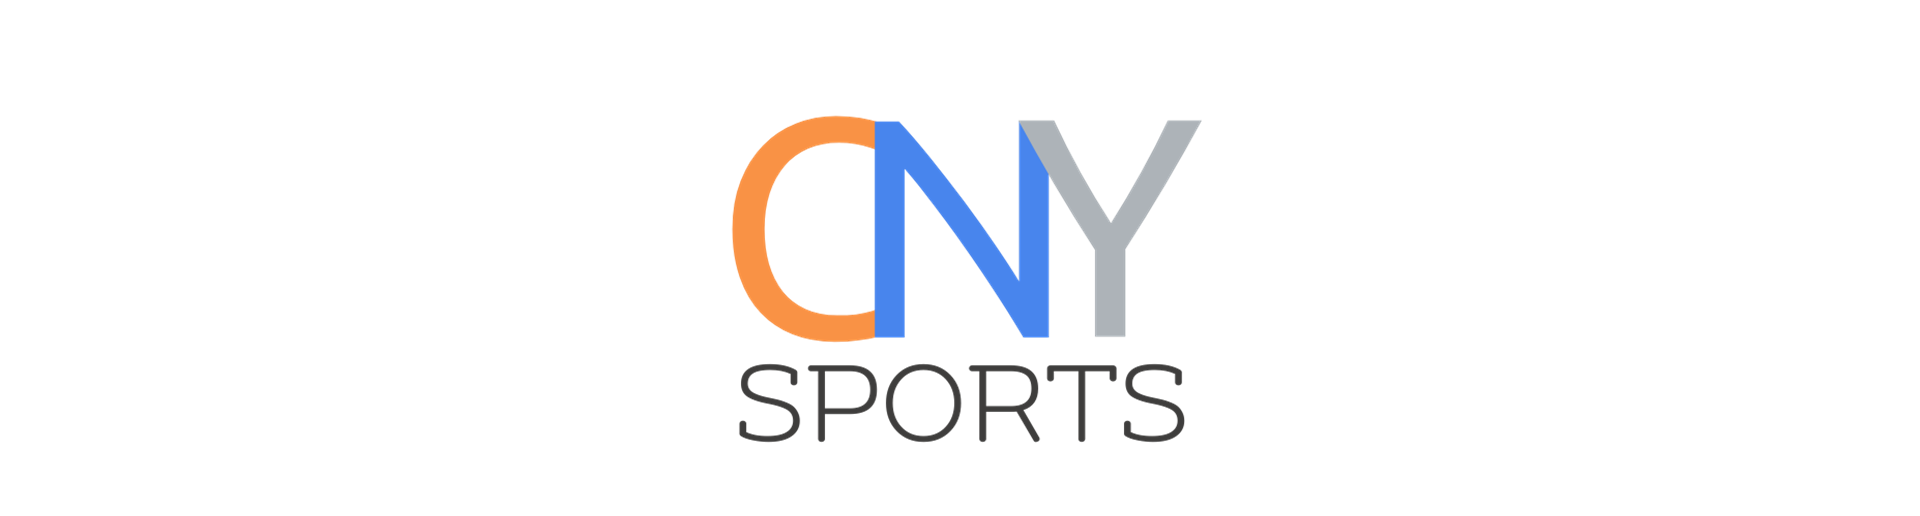 CNY Sports